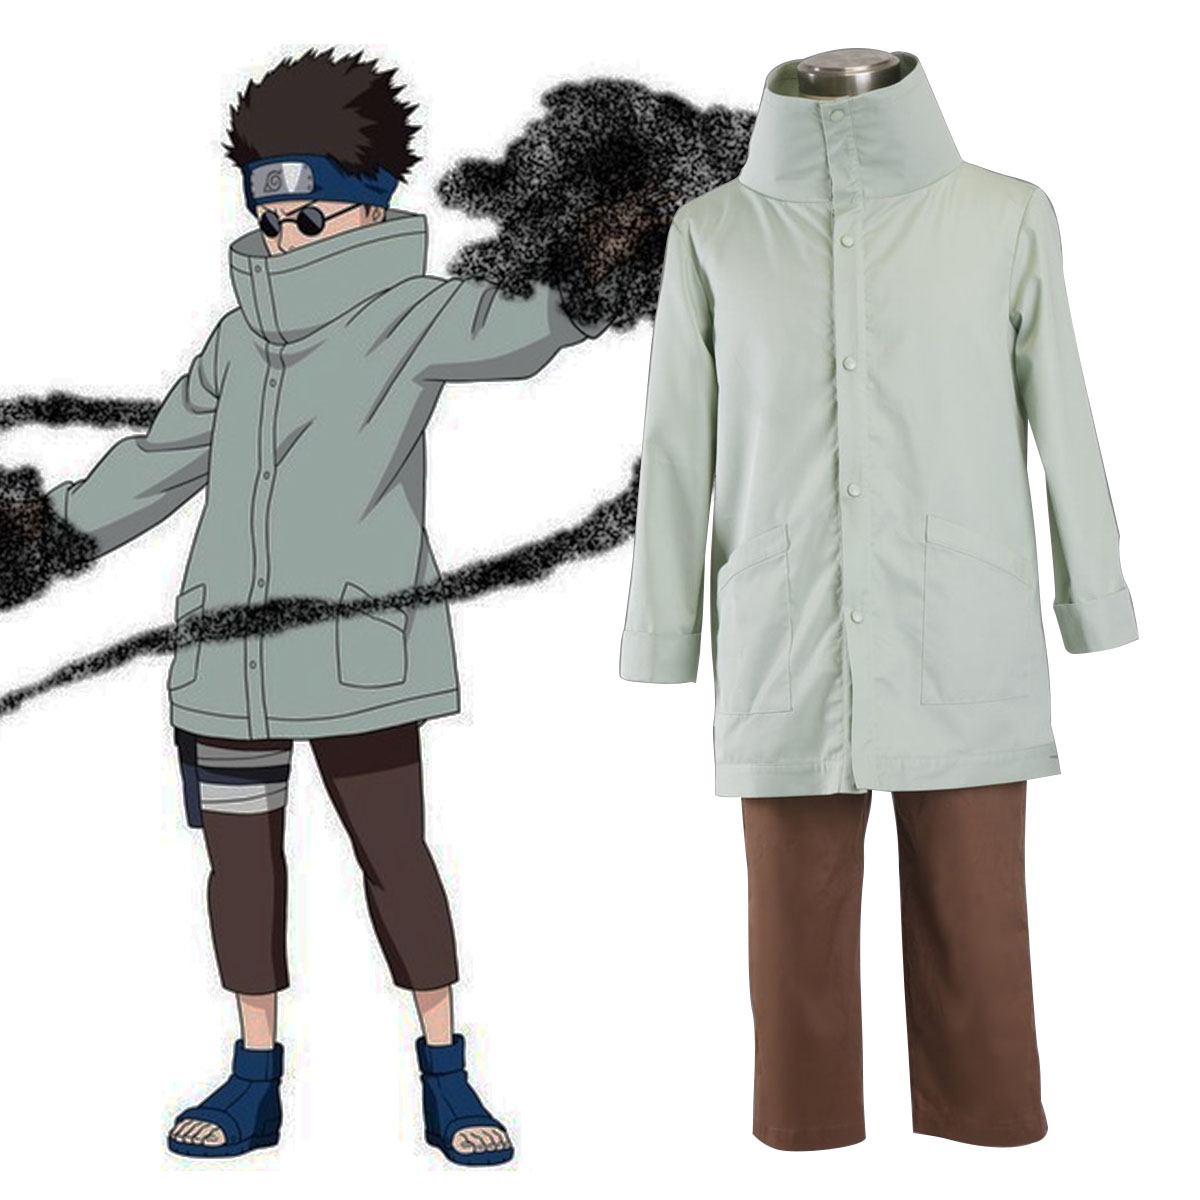 Naruto Aburame Shino 1 Anime Cosplay Costumes Outfit